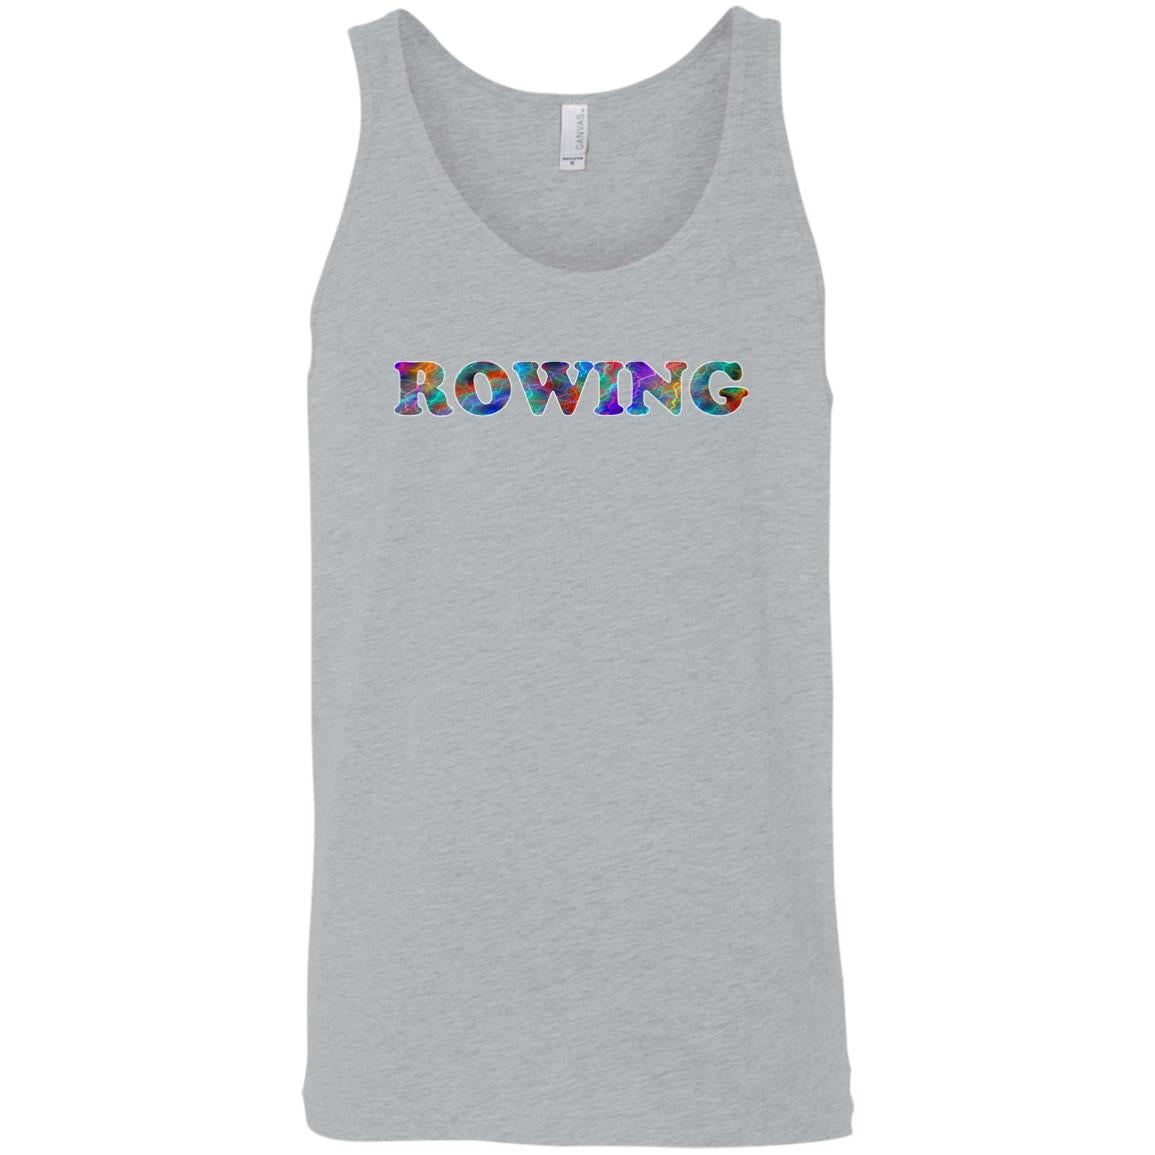 Rowing Sleeveless Unisex Tee